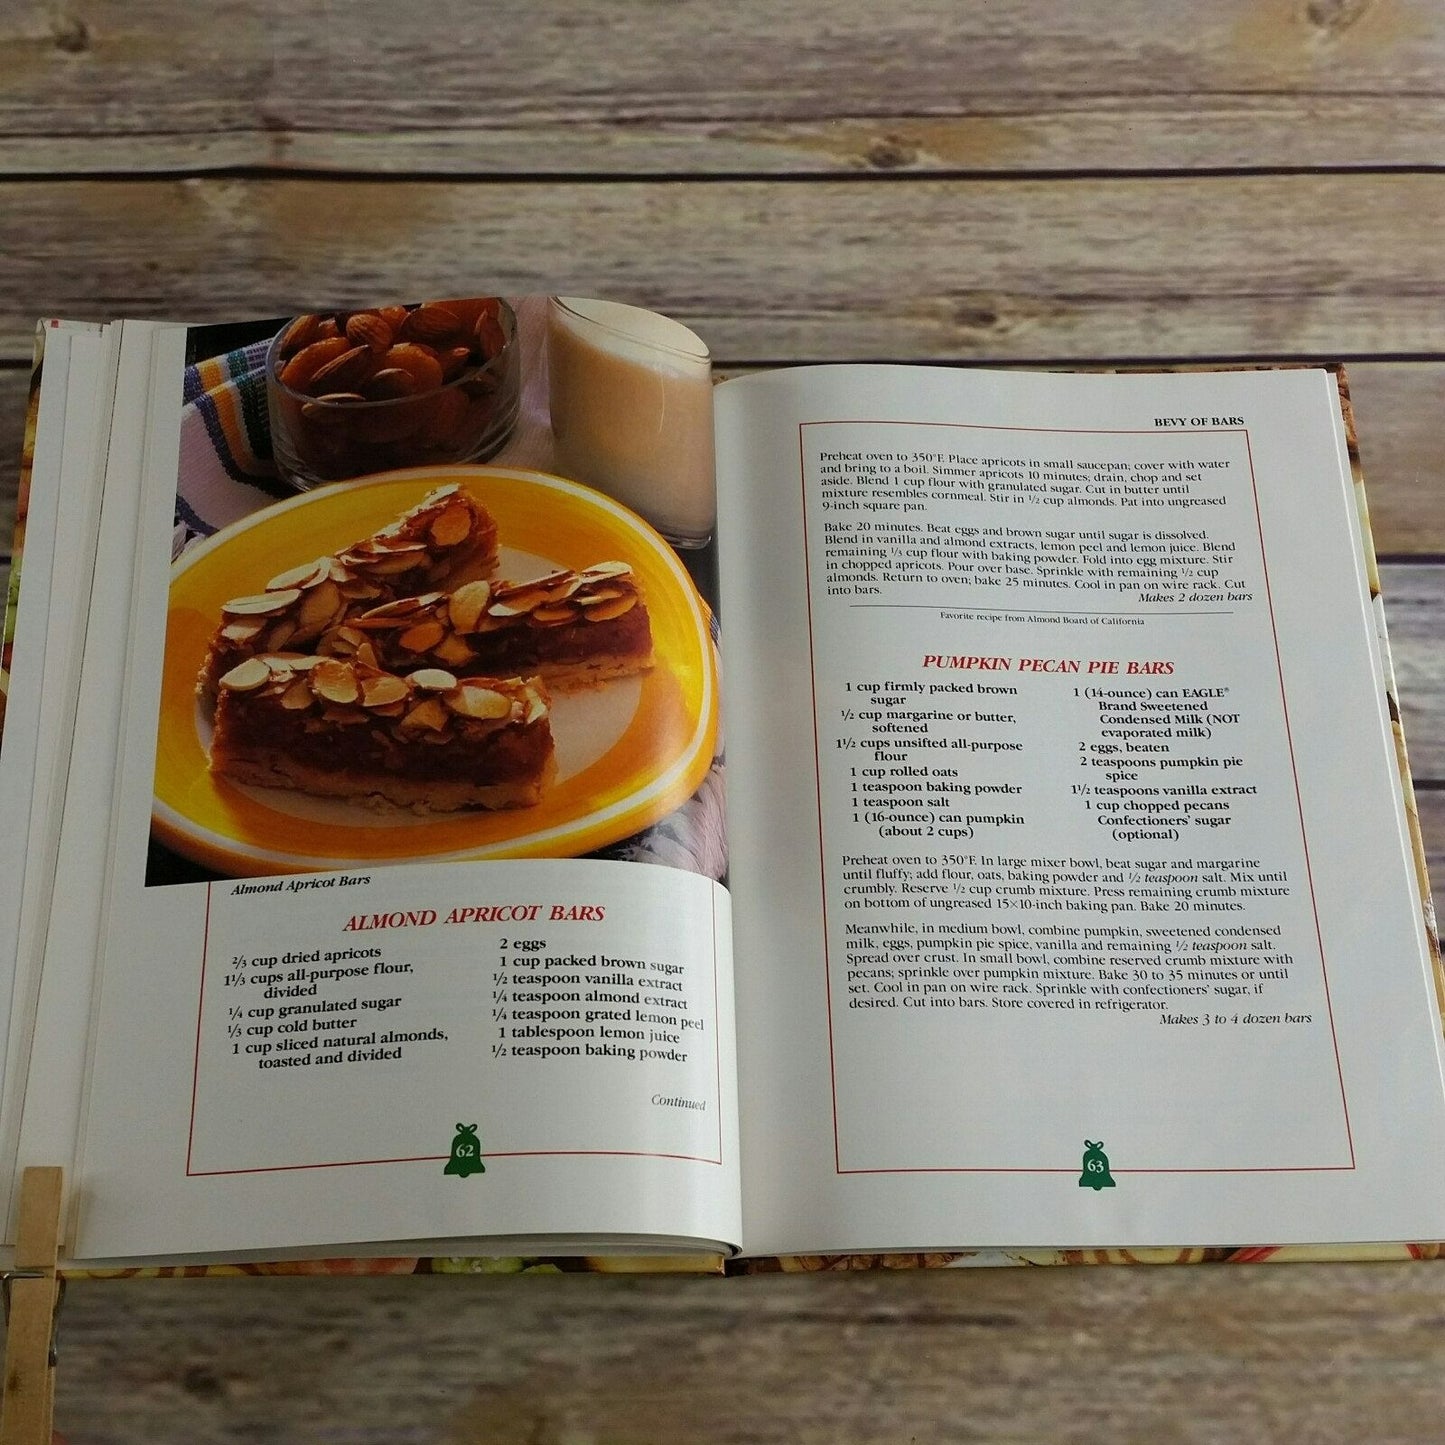 Vintage Cookbook Christmas Cookies Cookie Cook Book 1995 From Your Favorite Brand Name Companies Duncan Hines Hersheys Borden Hardcover